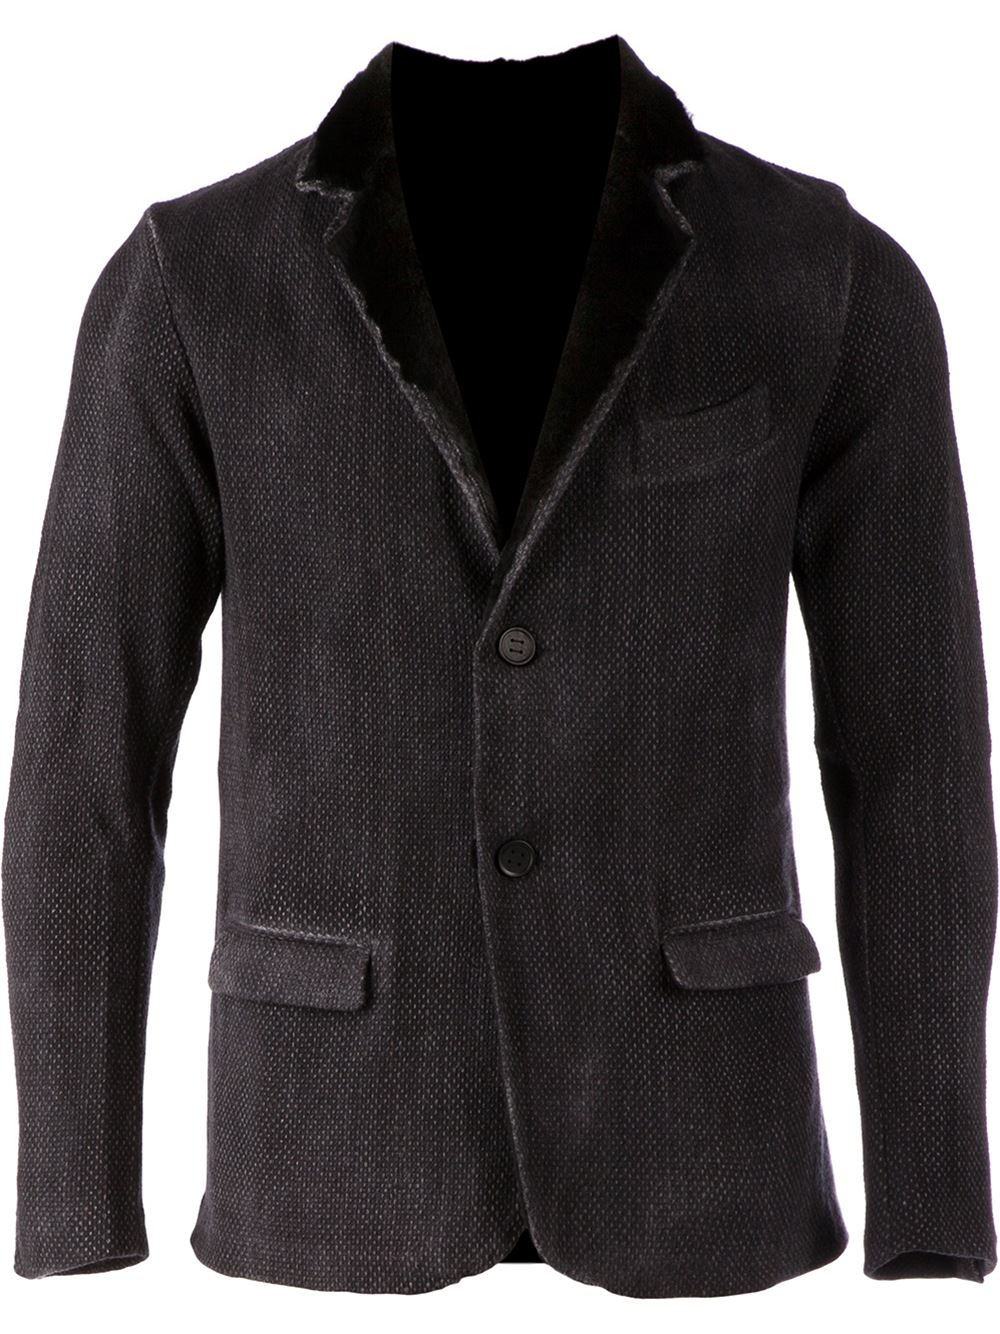 Lyst - Avant Toi Distressed Textured Blazer in Black for Men